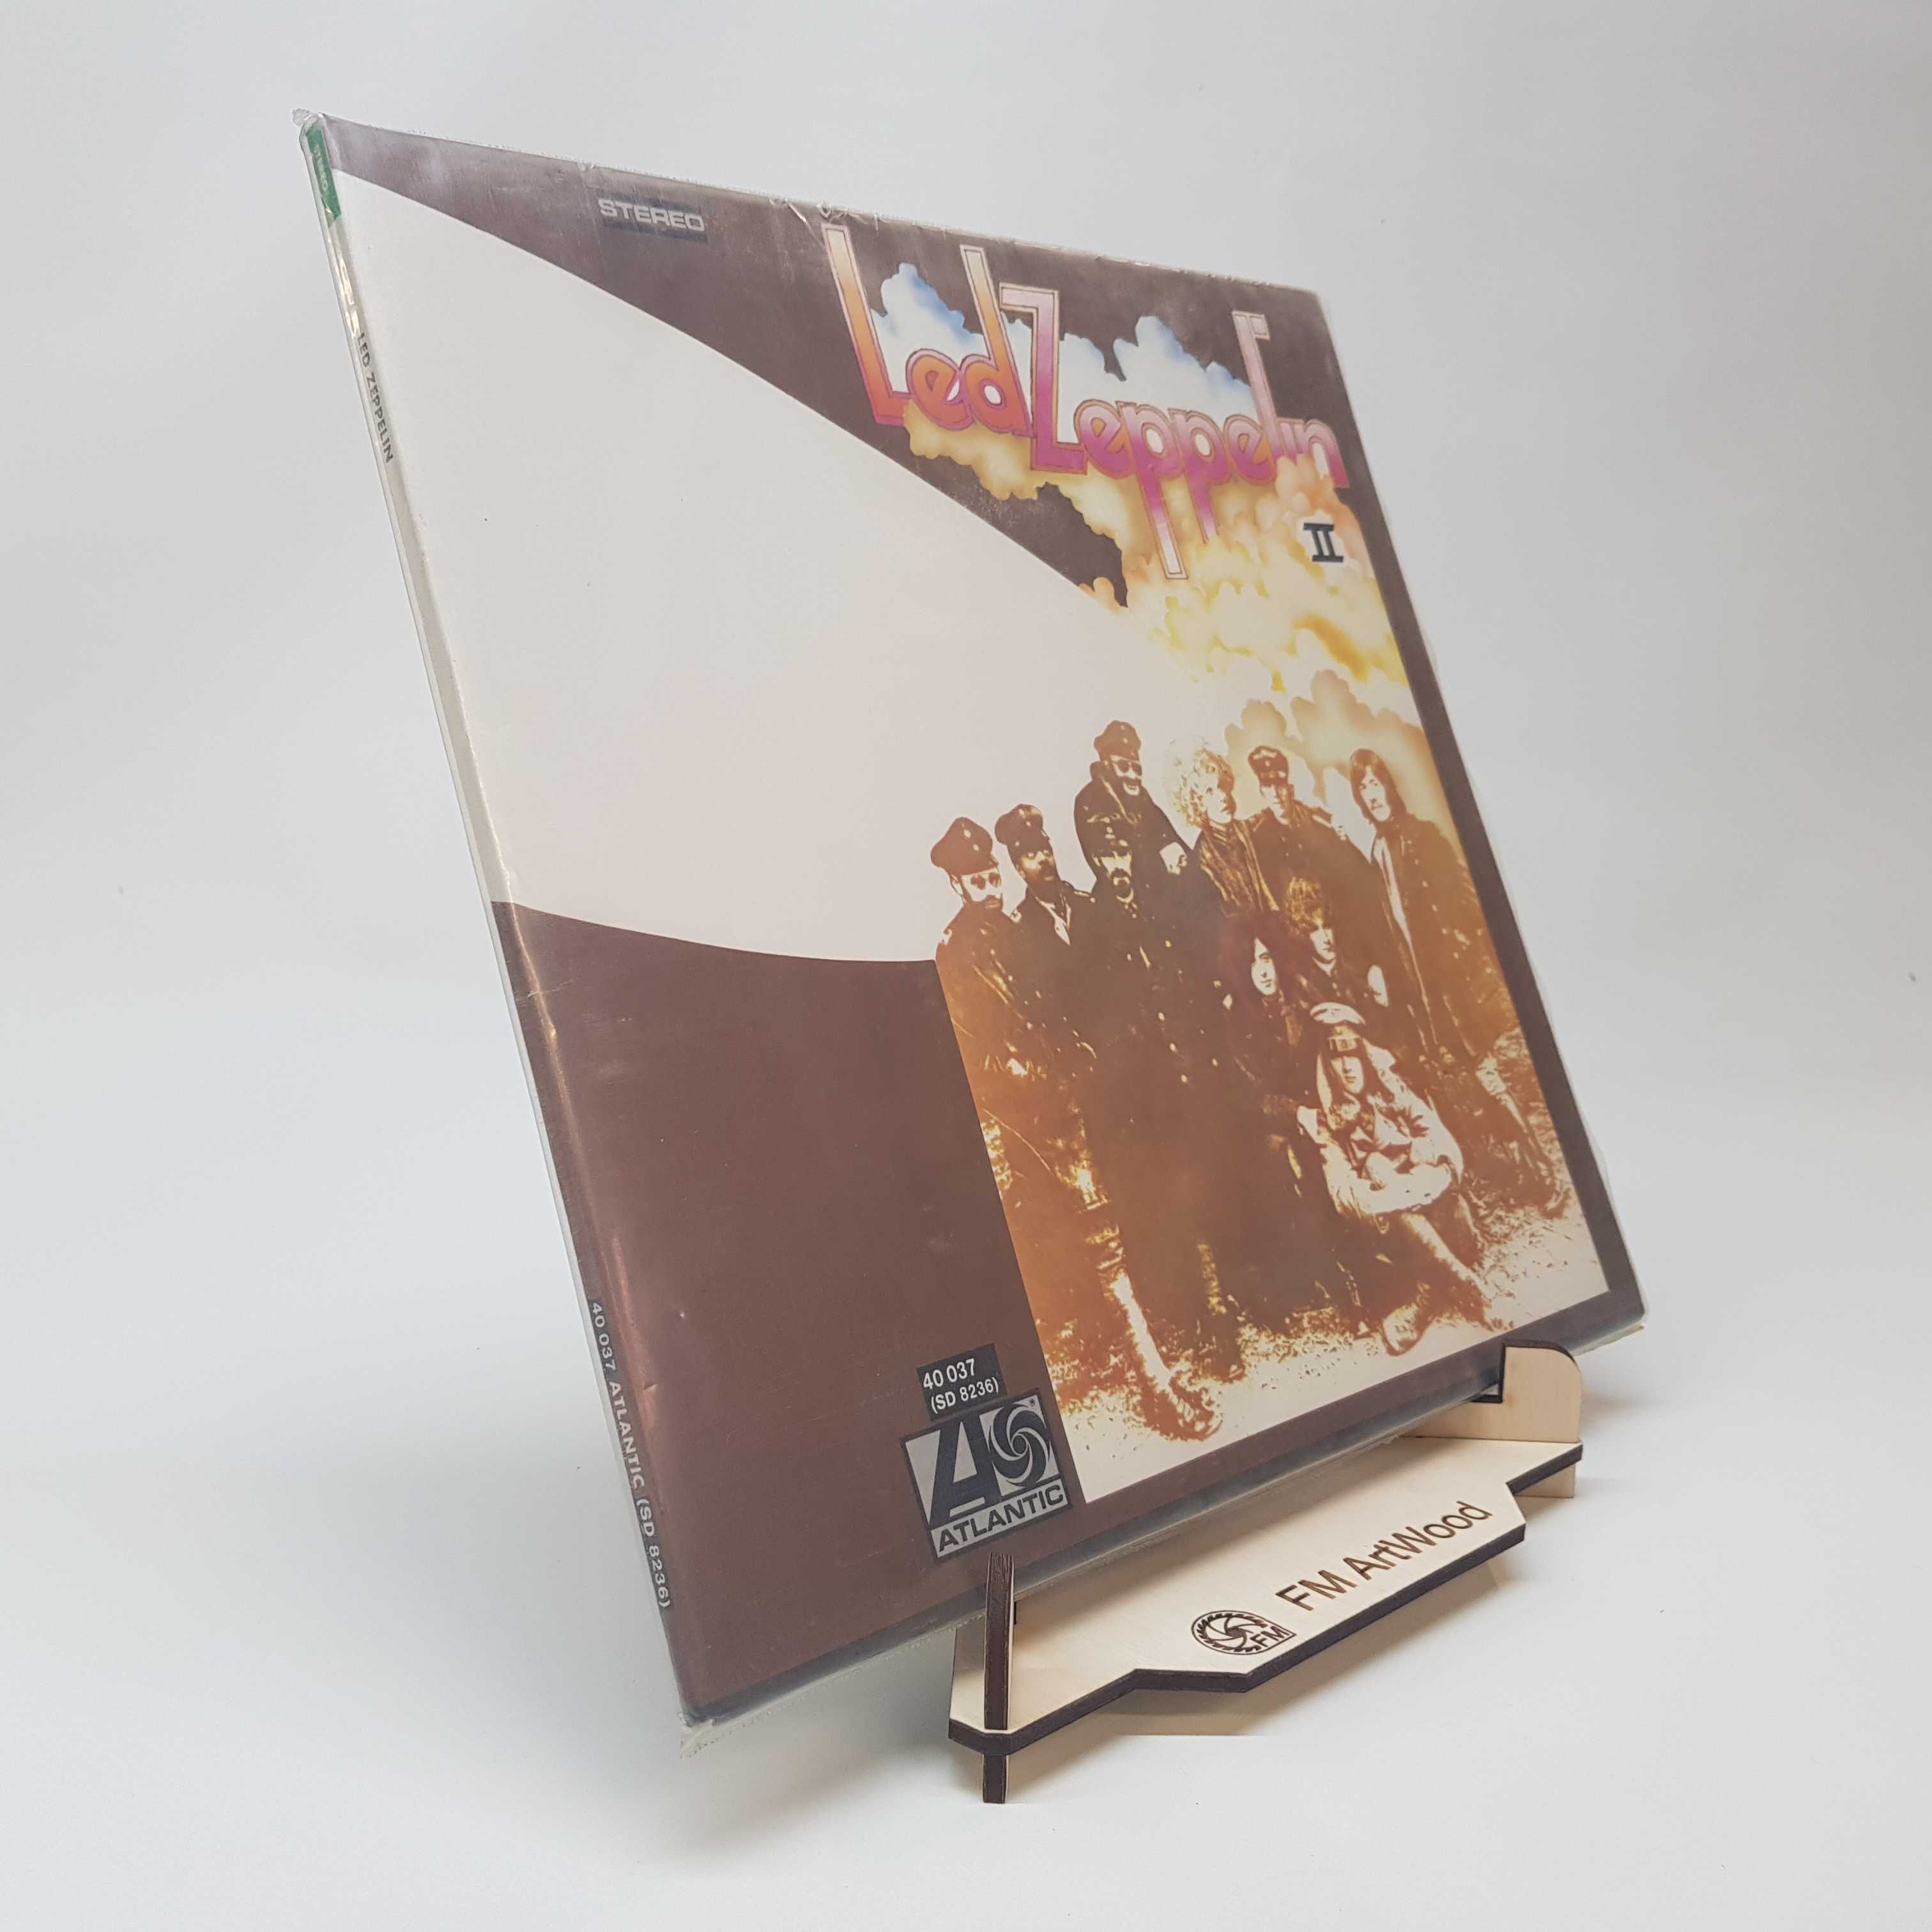 Suporte / Expositor para Discos de Vinil (LP)